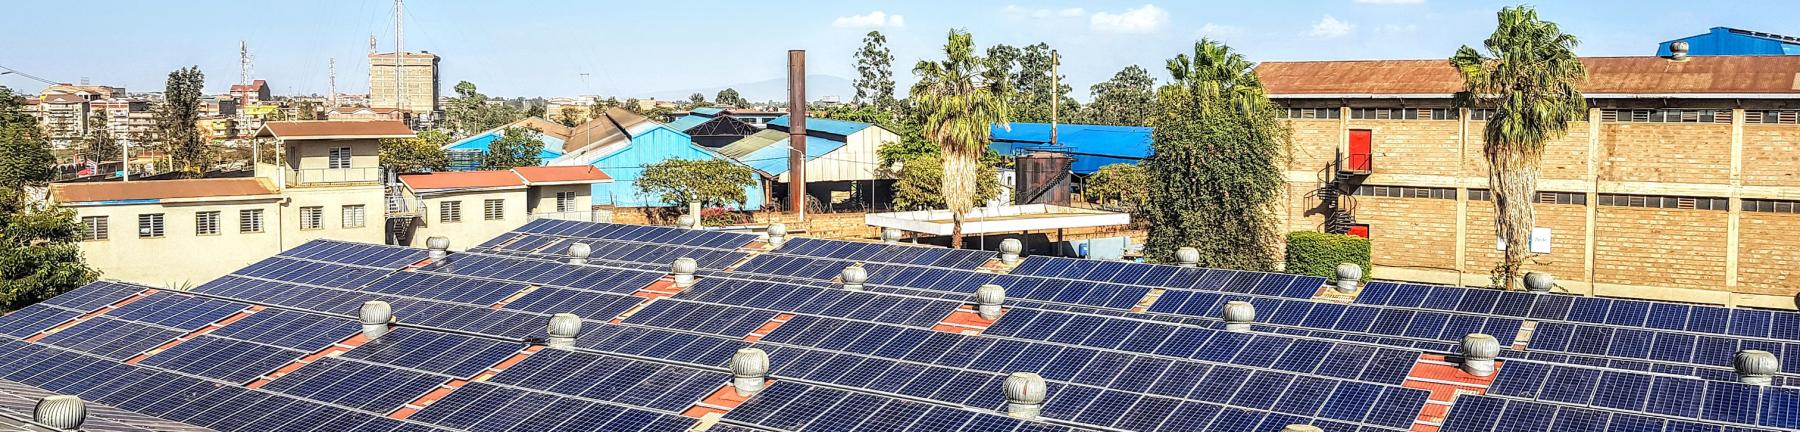 solar panels on roof of factory near Nairobi